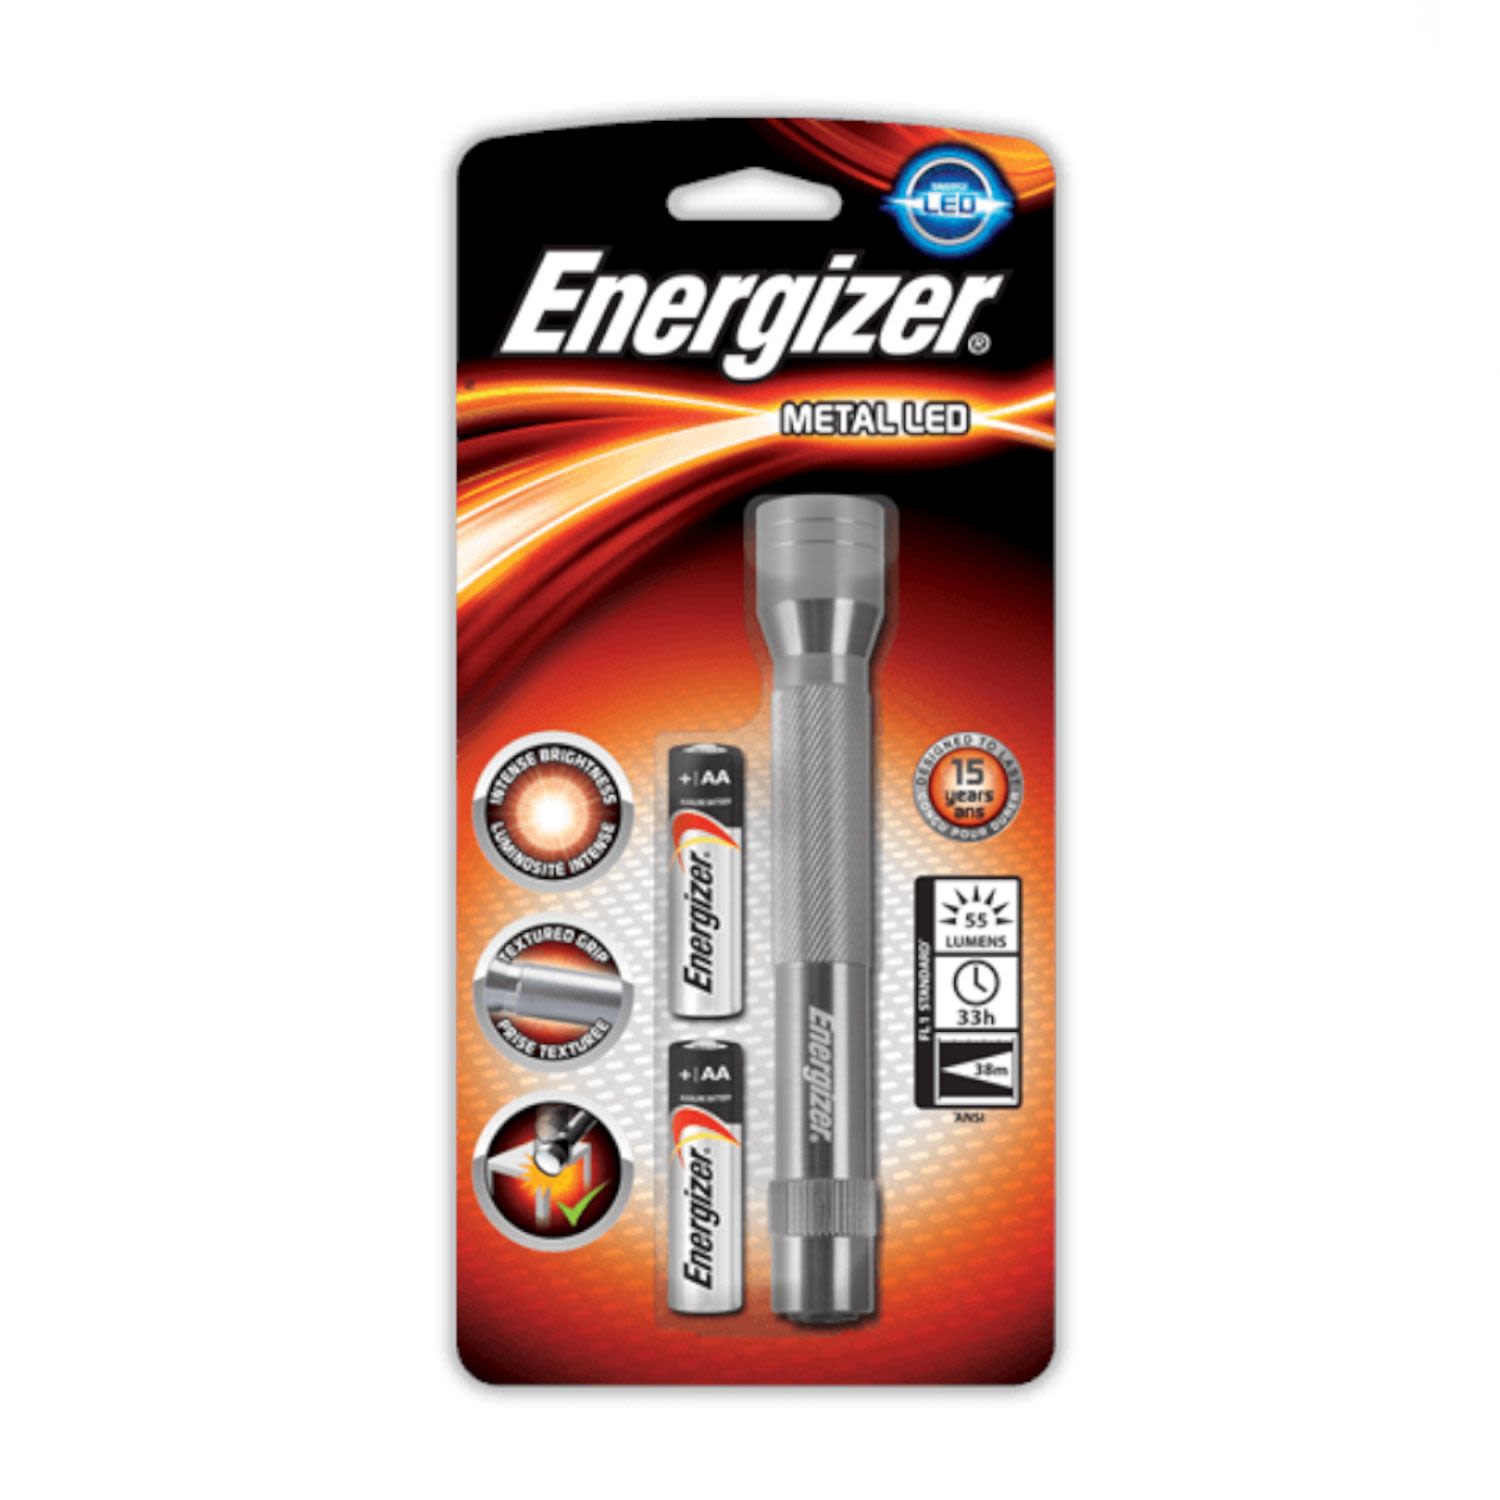 Energizer Metal LED Torch, 1 Each